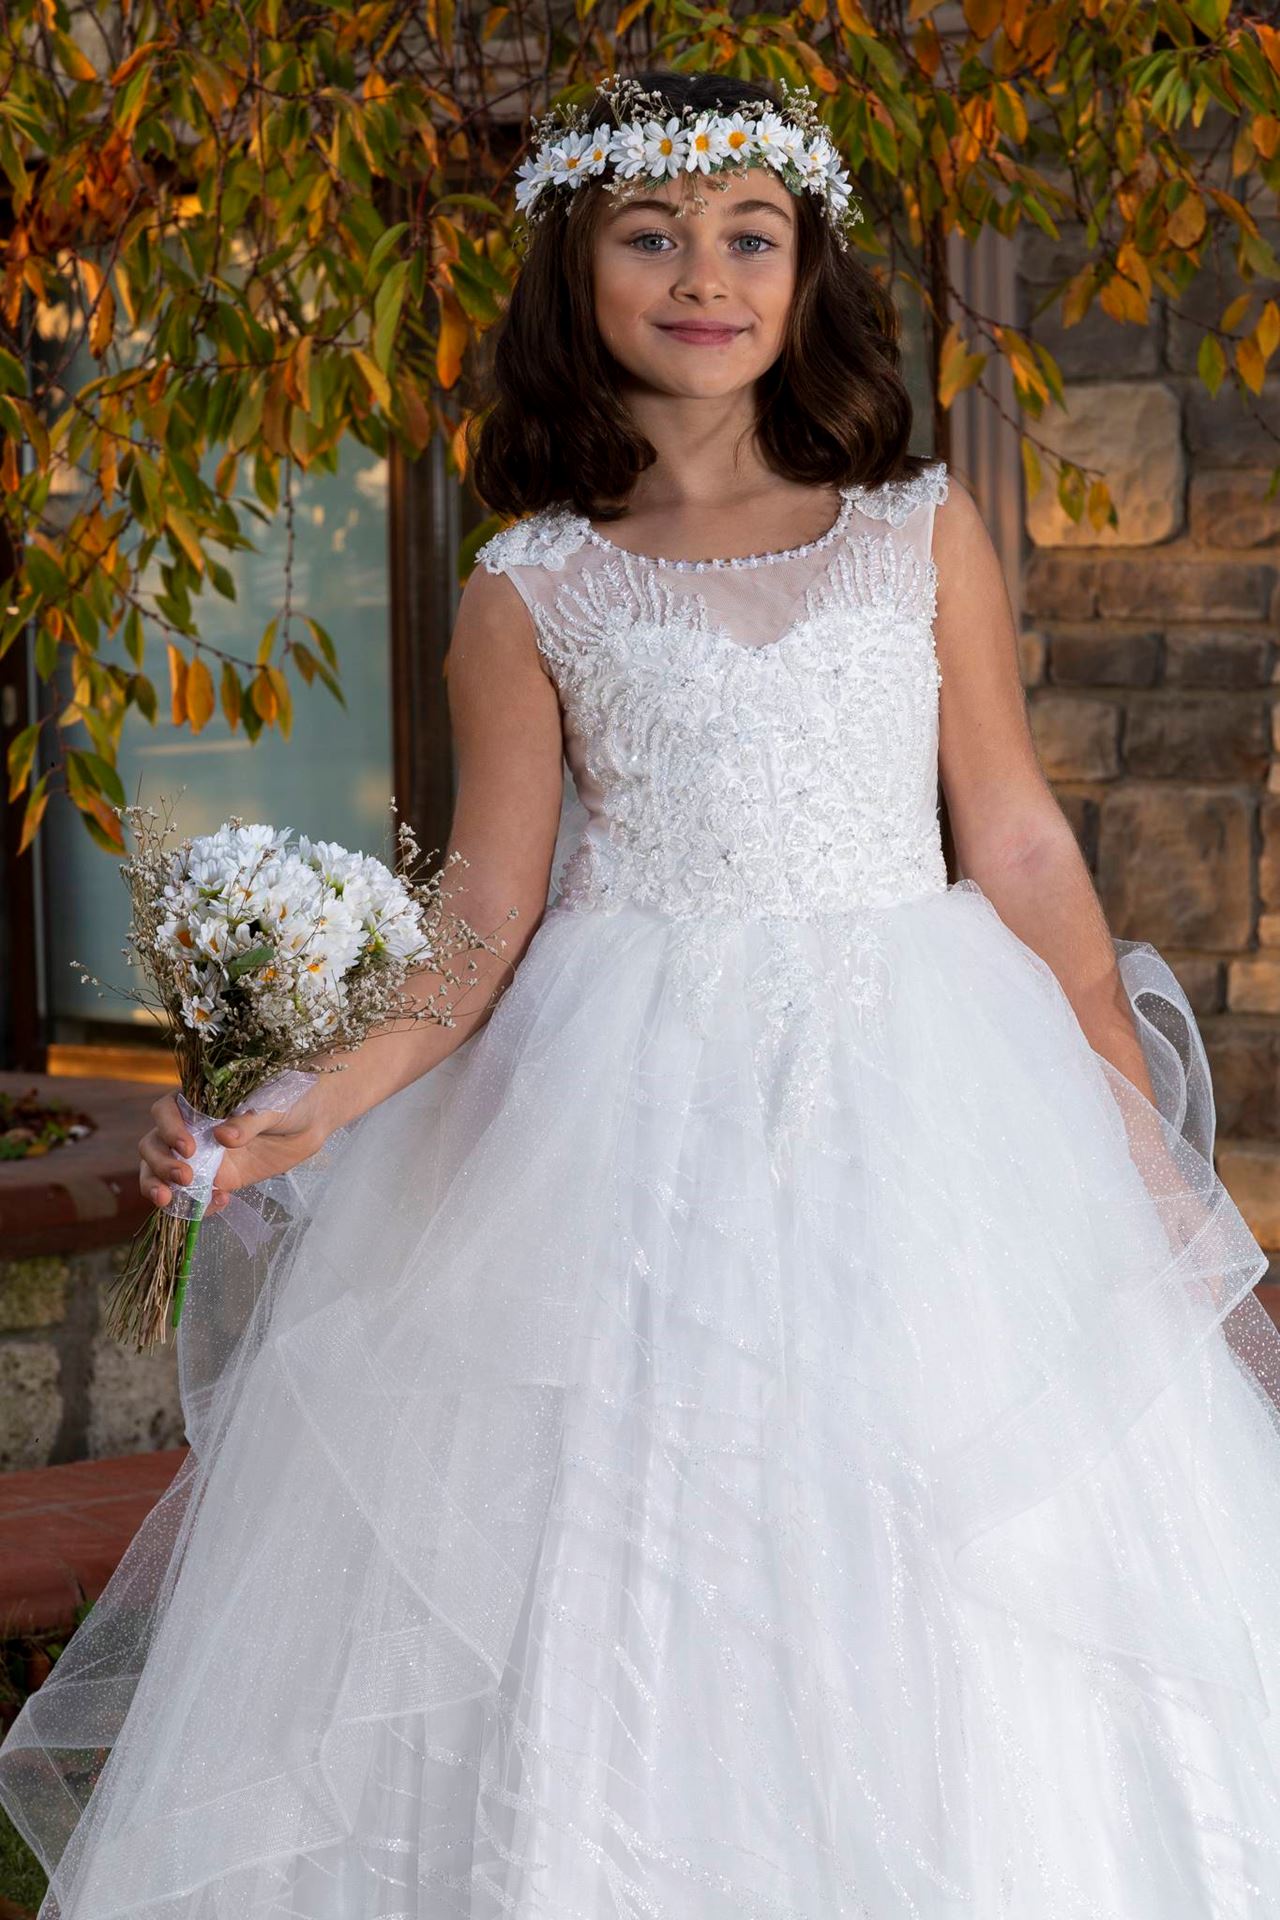 Cyrene 2-6 Years Old Girl Dress 20064 Off White